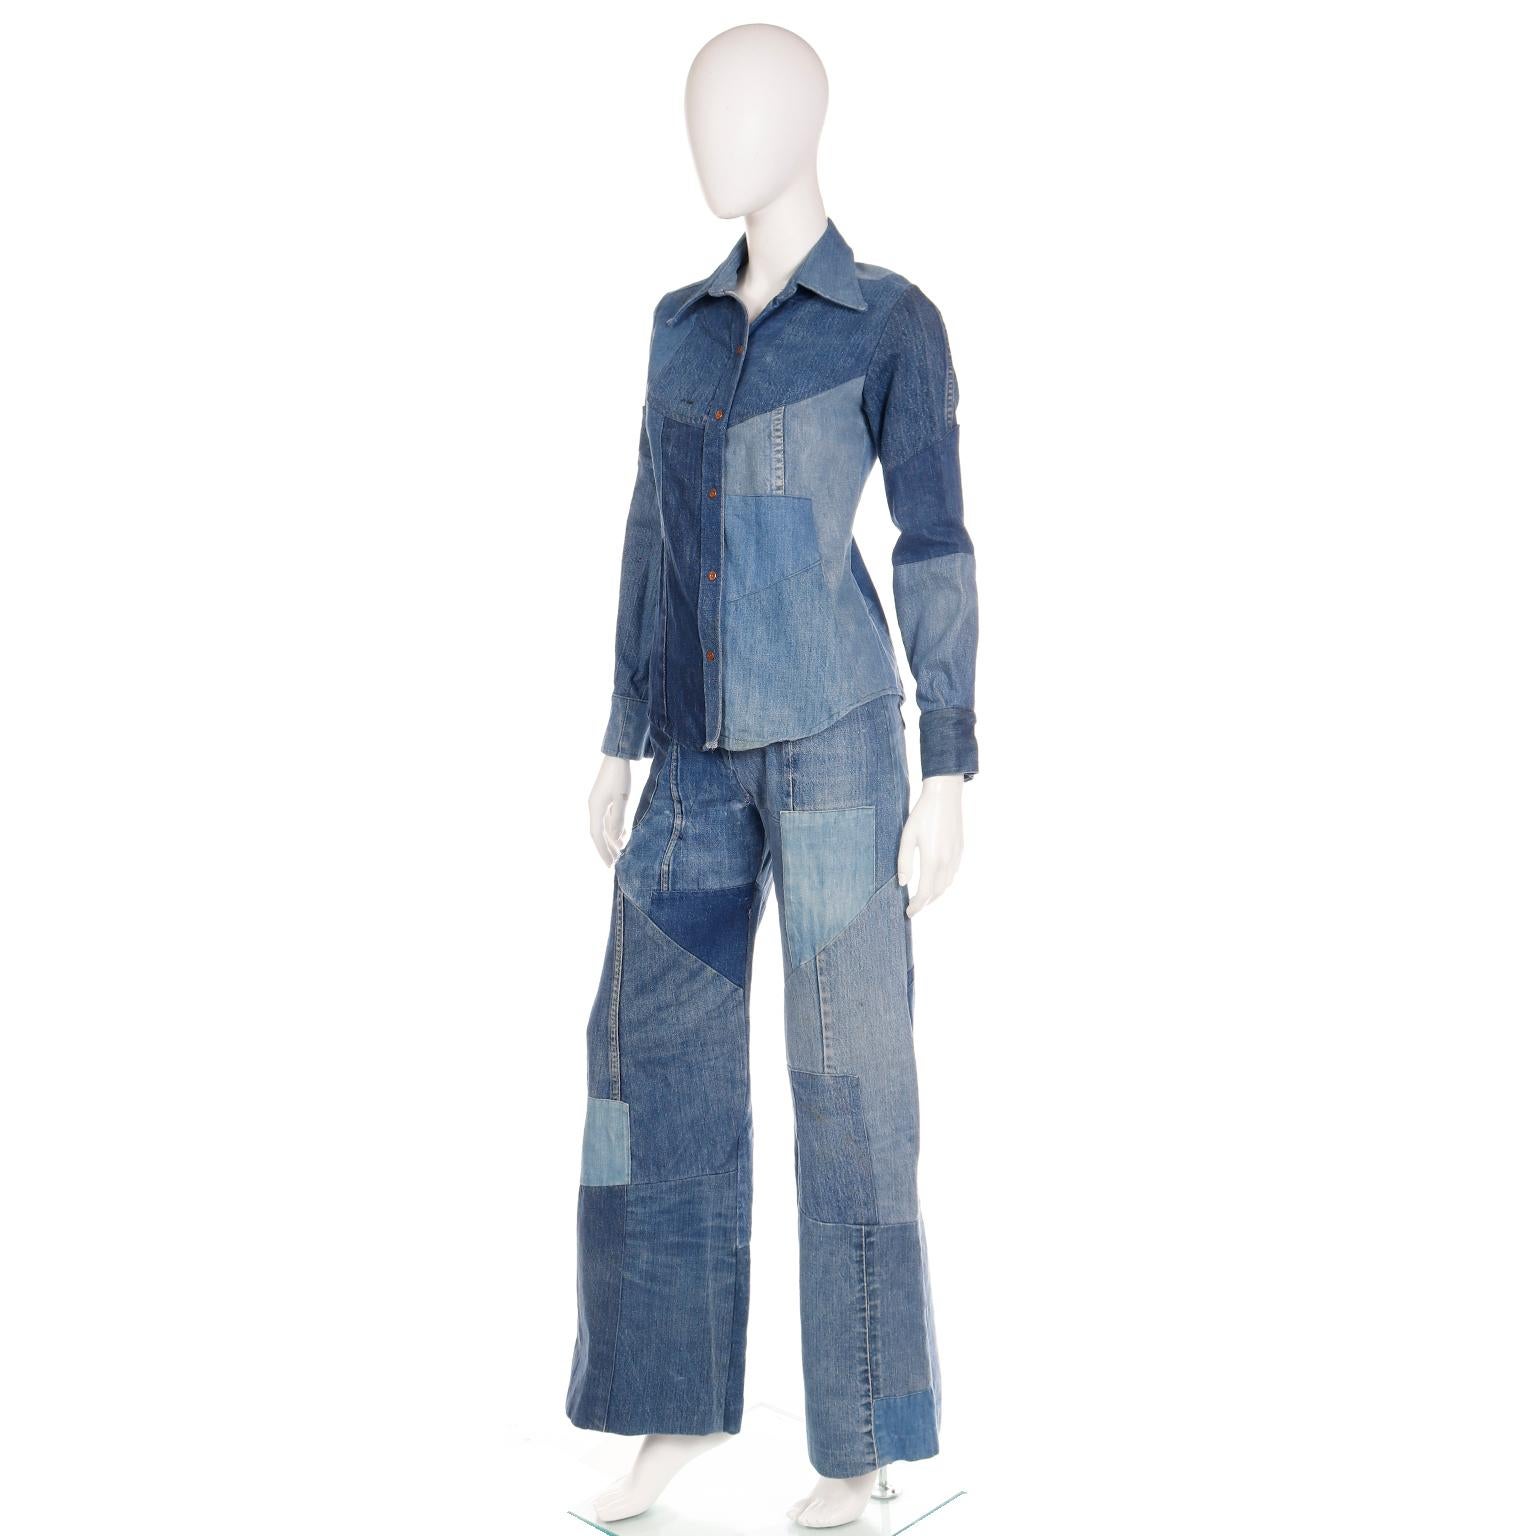 Women's or Men's Simis Vintage 1970s Patchwork Denim Jeans and Button Front Shirt 2 Pc Outfit